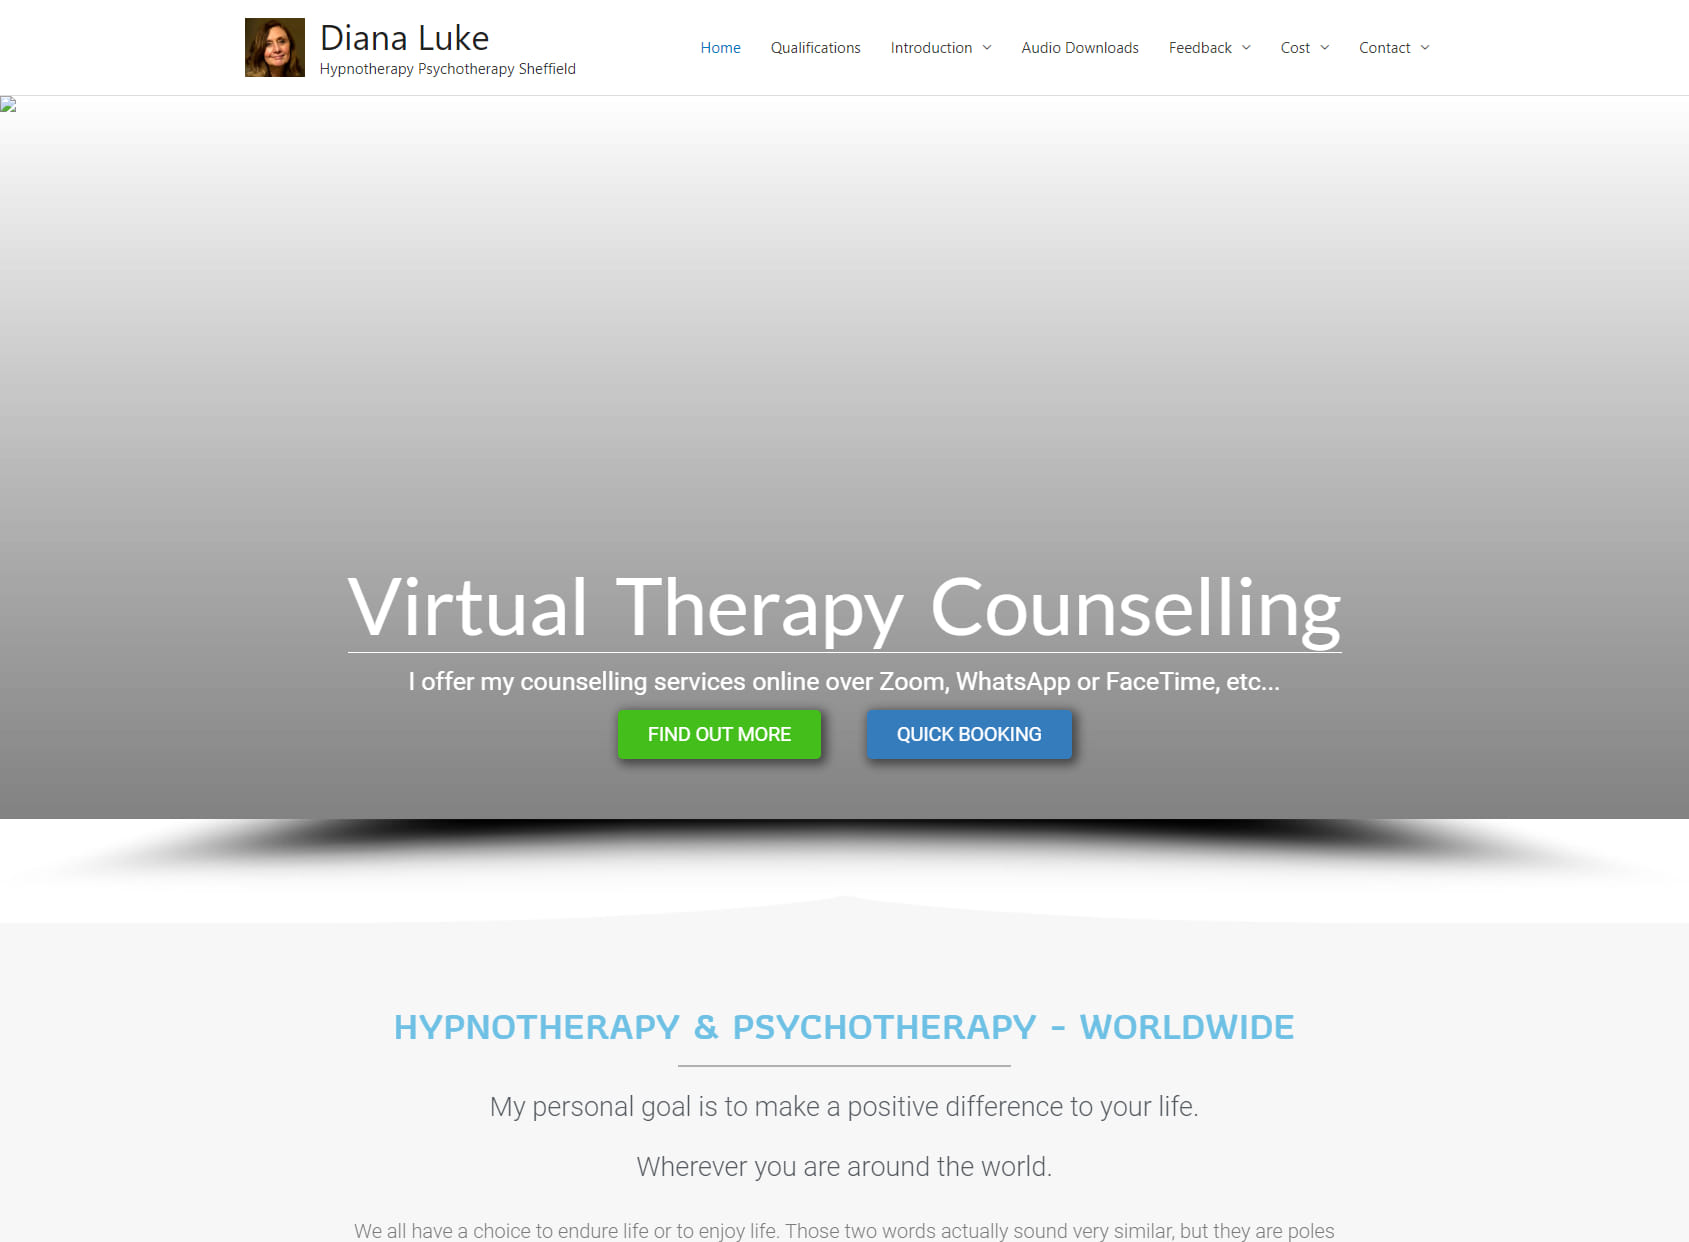 Diana Luke Hypnotherapy Psychotherapy